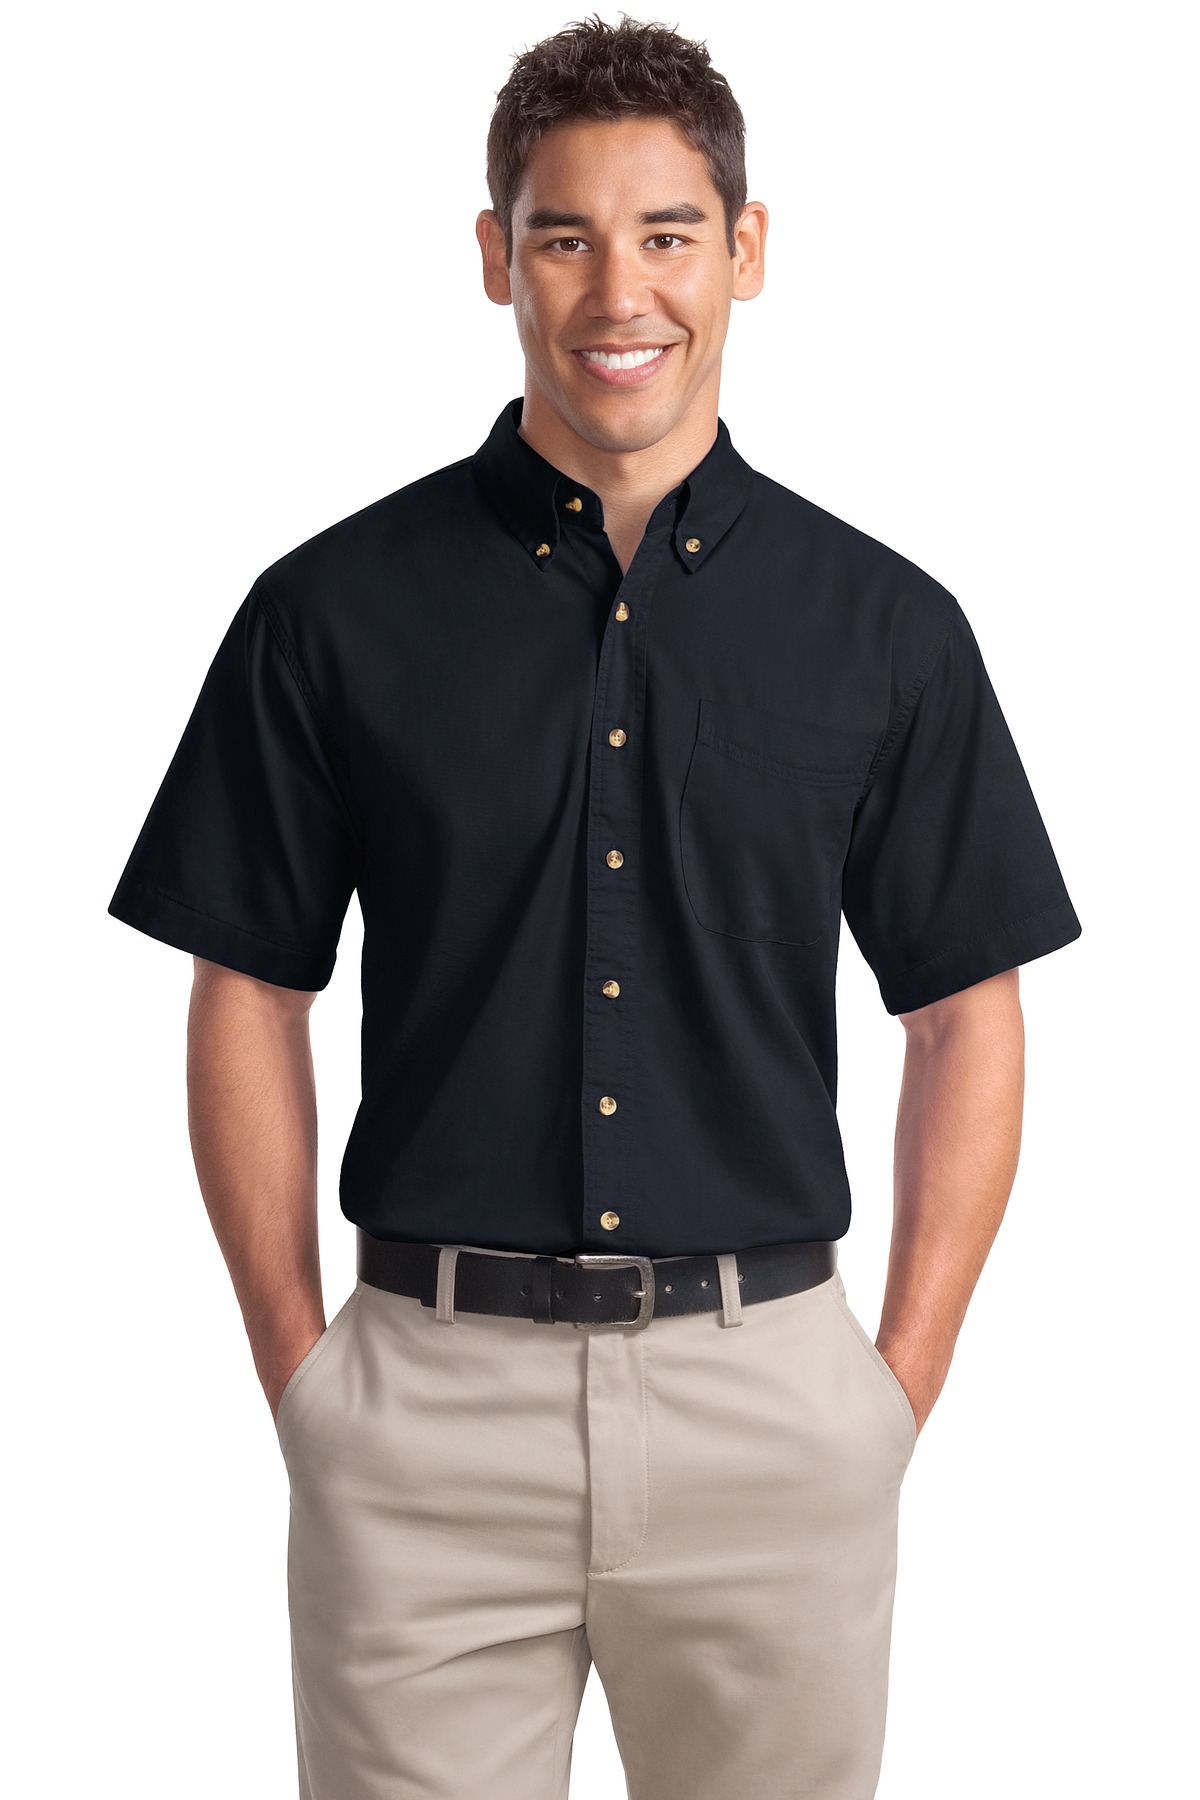 Port Authority Woven Shirts for Hospitality ® Short Sleeve Twill Shirt.-Port Authority